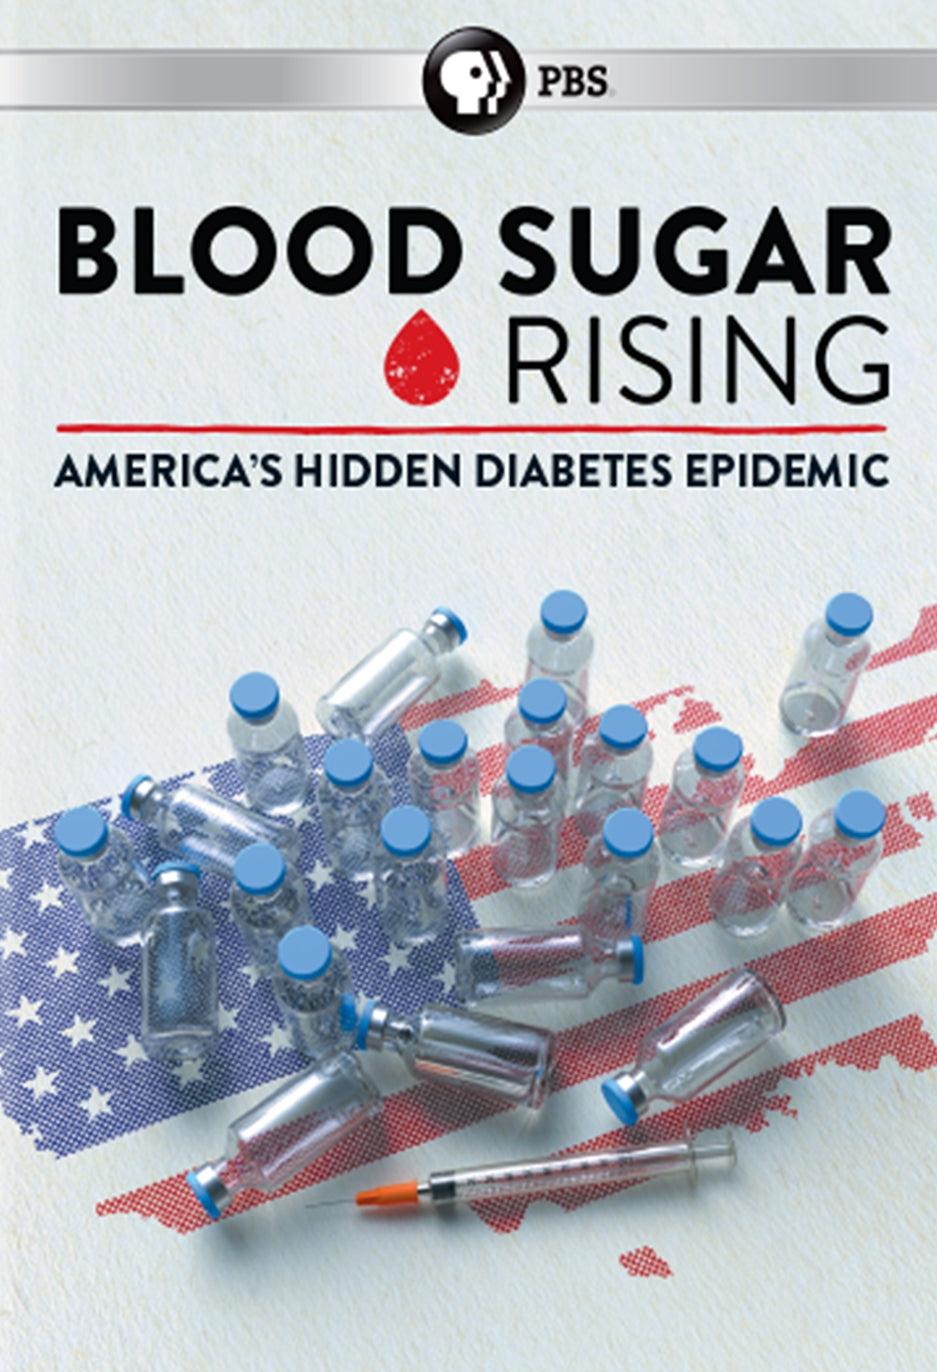 Blood Sugar Rising cover art